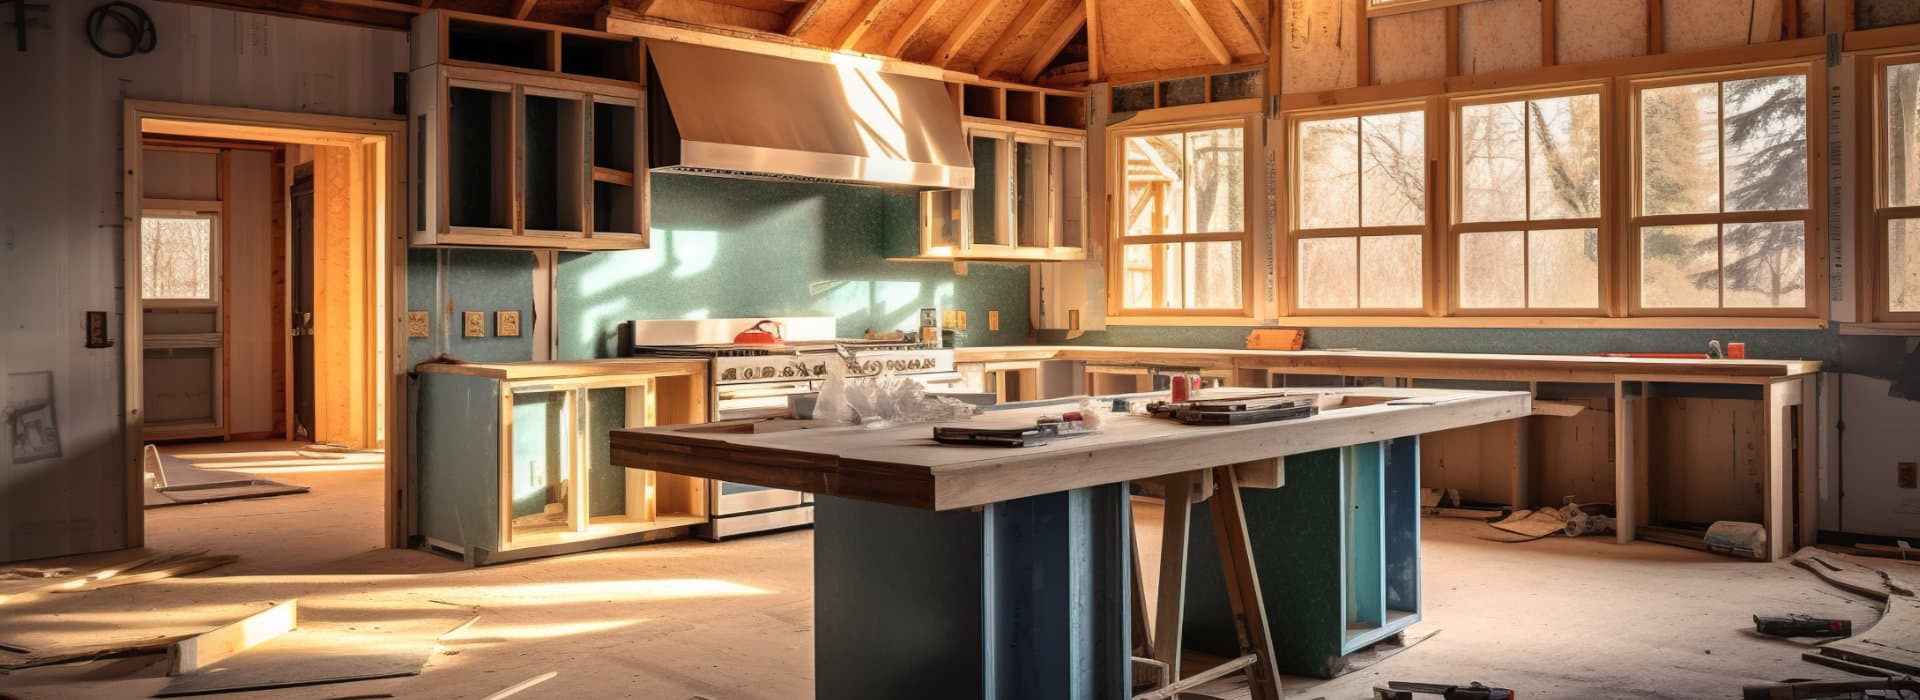 Top 5 Reasons for Hiring an Interior Designer When Building a Custom Home